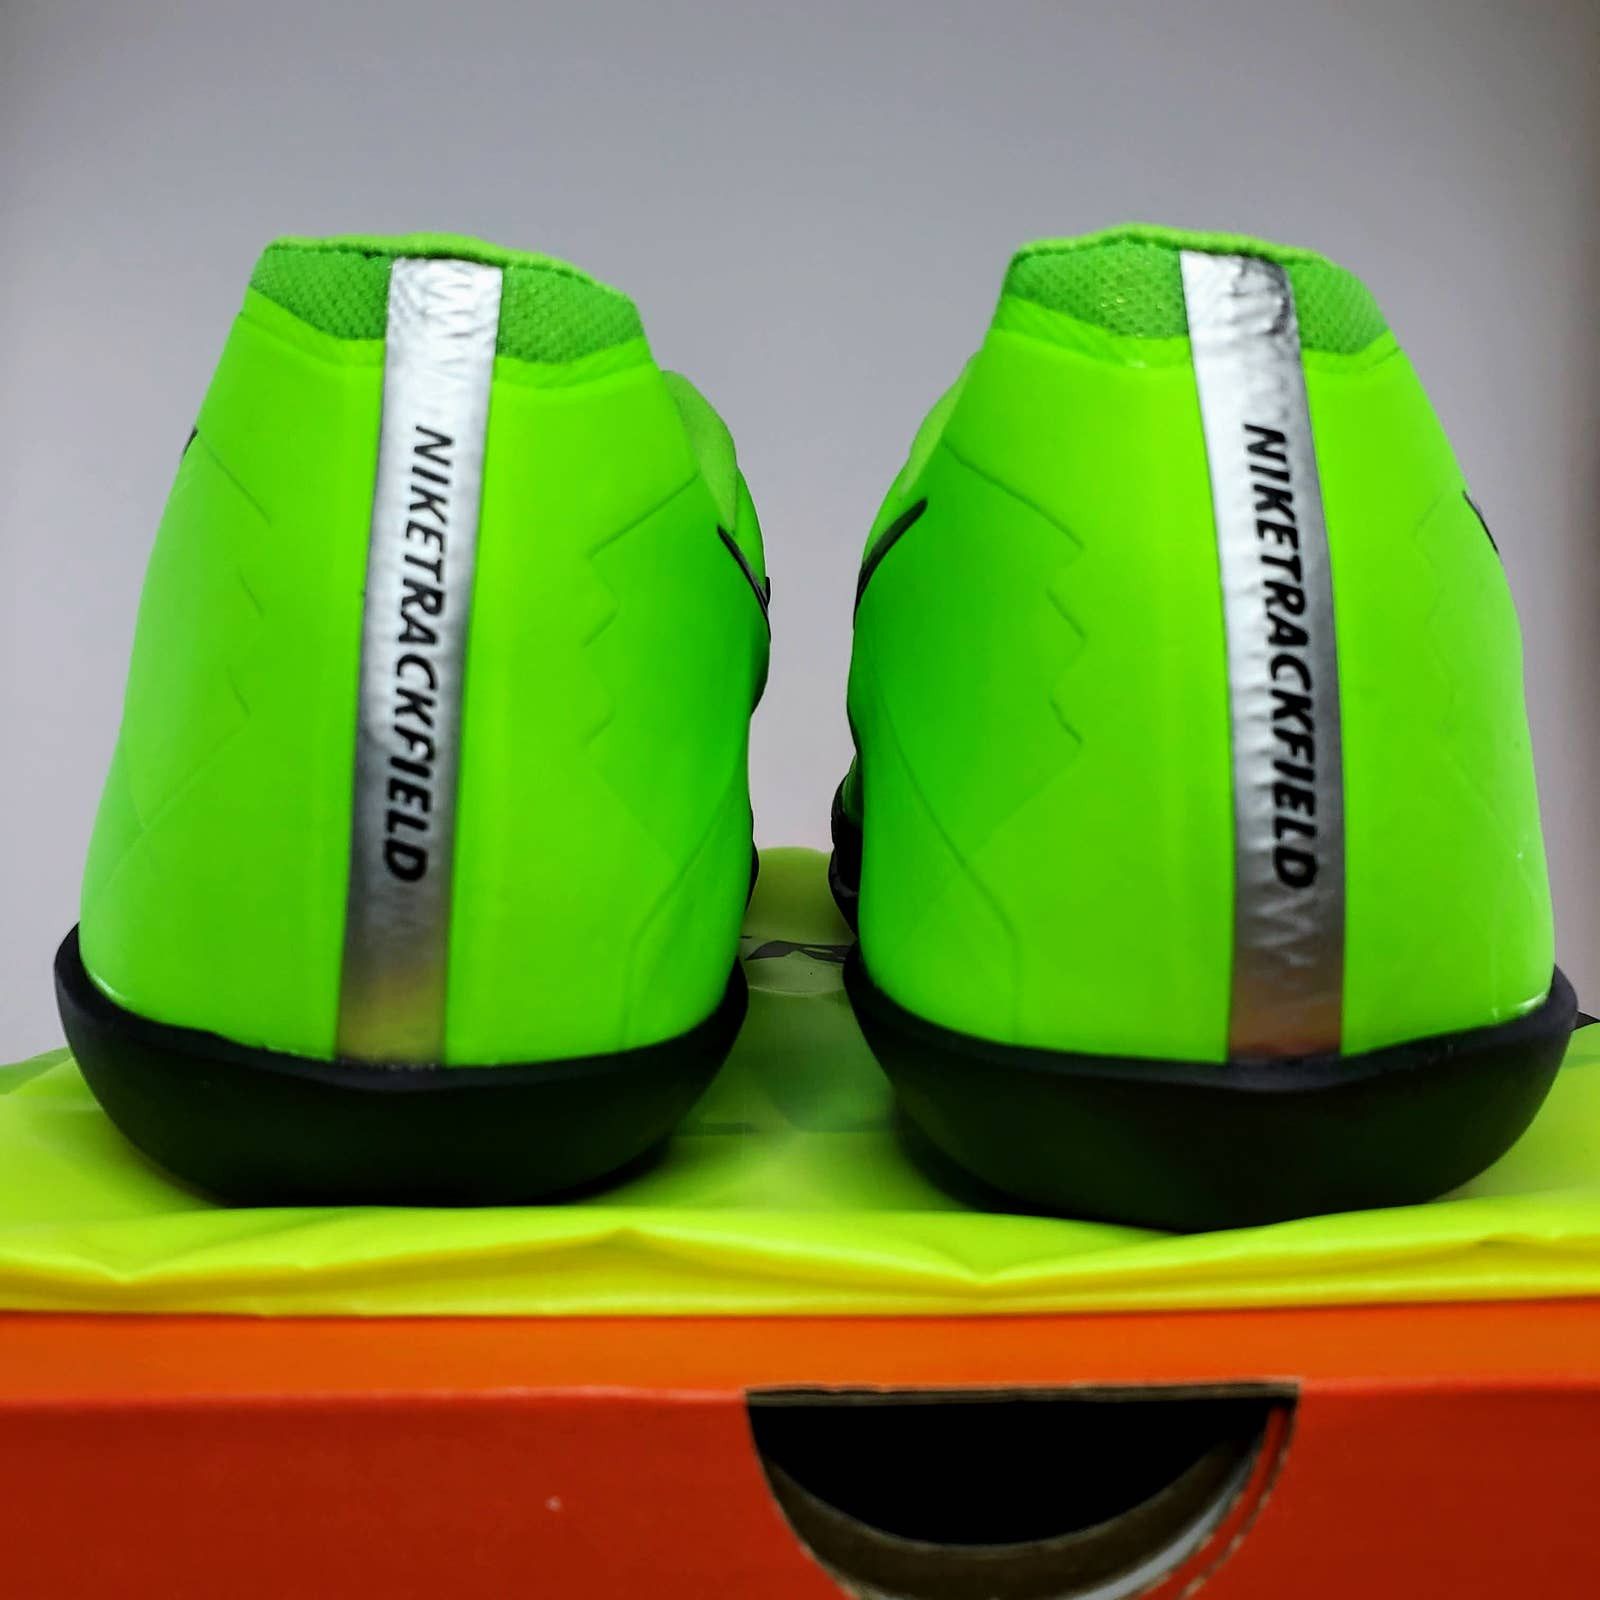 Nike NIKE Zoom Rival SD 4 Shoes Green Sizes 6.5, 7.5, 9.5, 12.5 Size US 9.5 / EU 42-43 - 4 Thumbnail